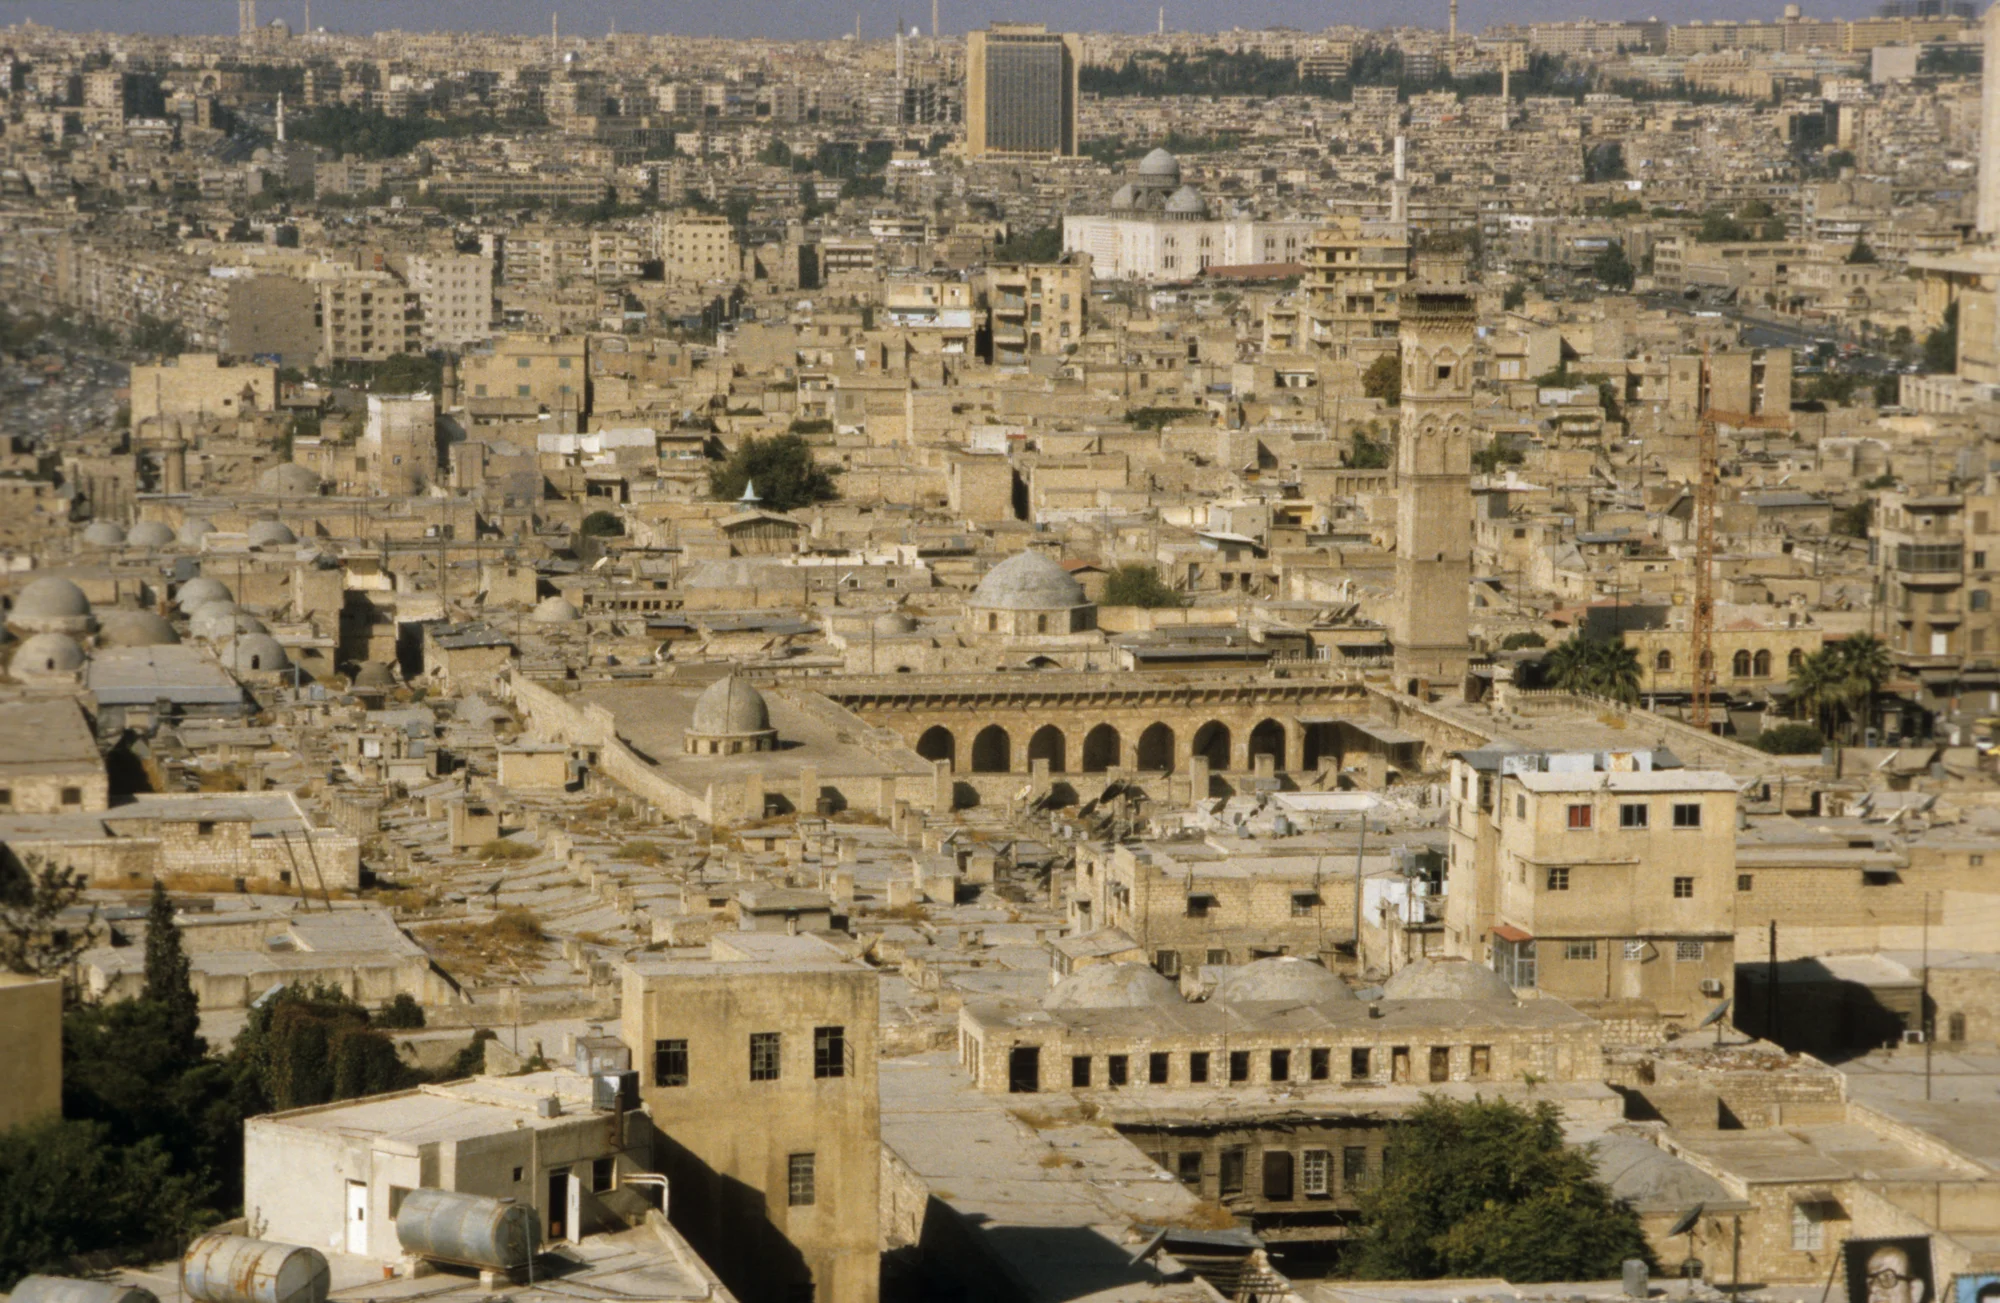 View over city, Jamiʿ Halab al-Kabir